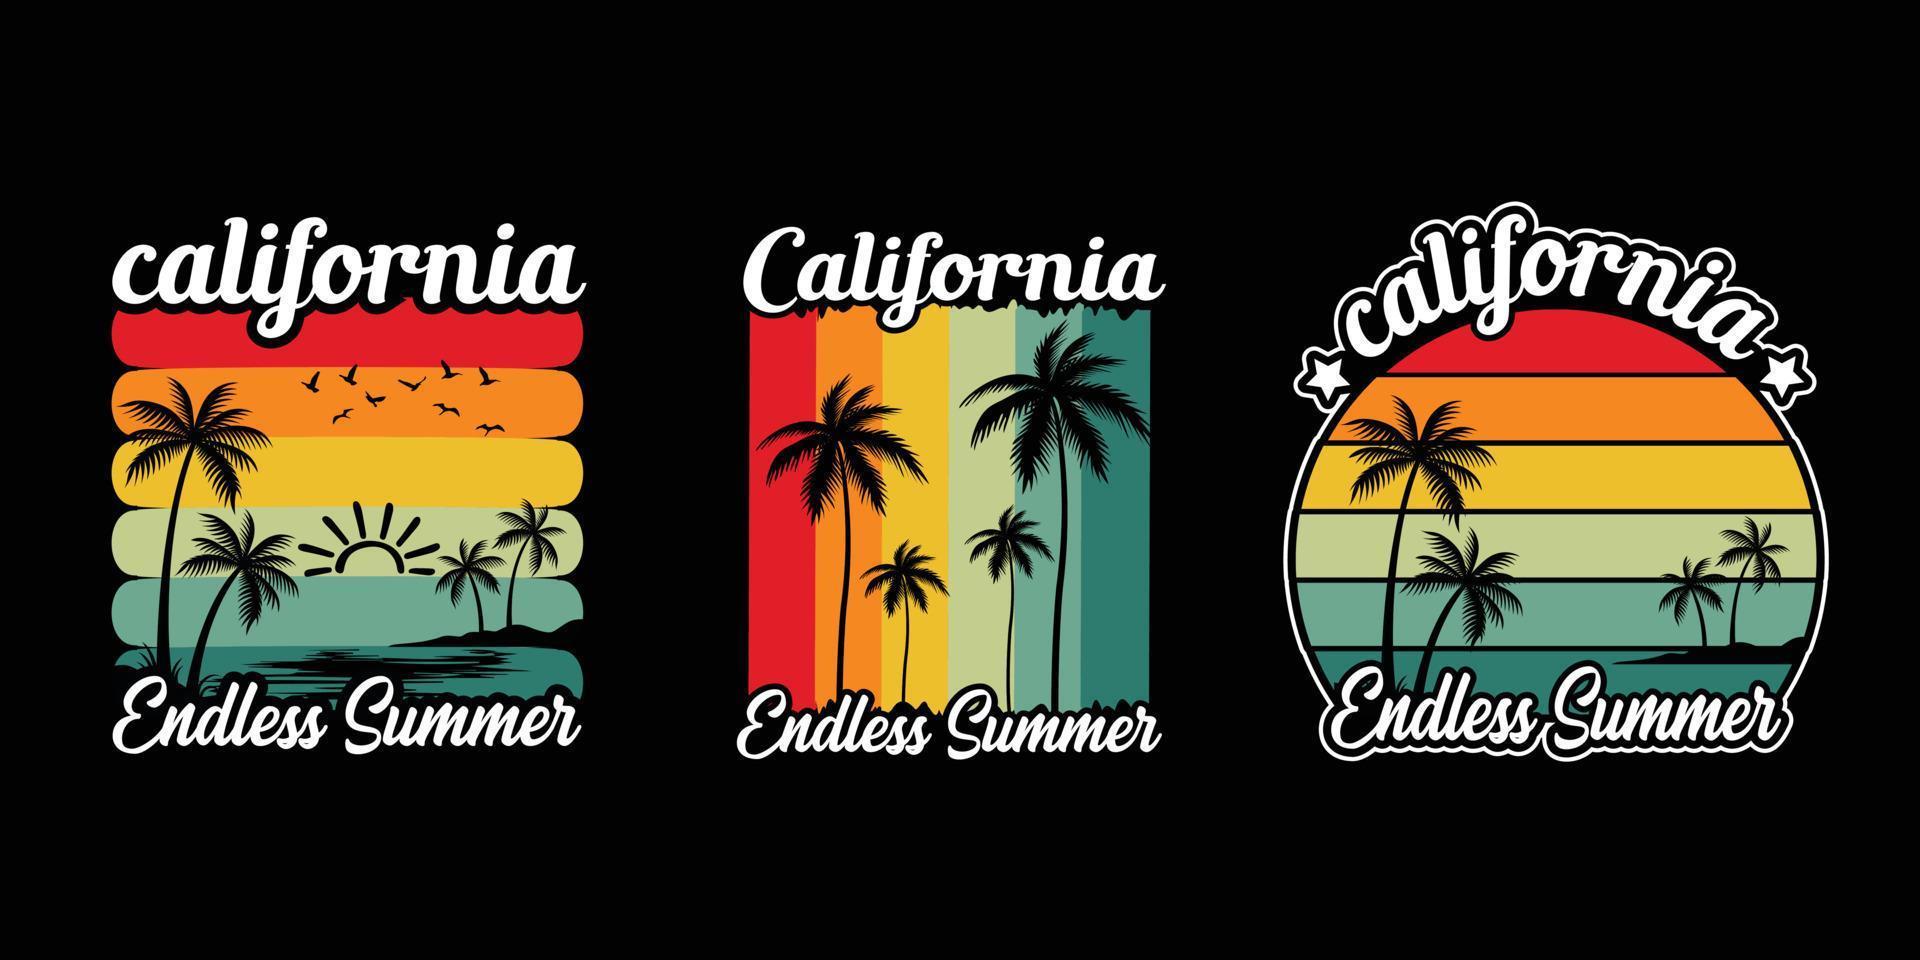 Vintage Retro sunset summer beach t-shirt design for summer vibes only, California beach enjoy summer with palm trees Deckchair umbrella t-shirt graphics  banner, poster, flyer vector illustration